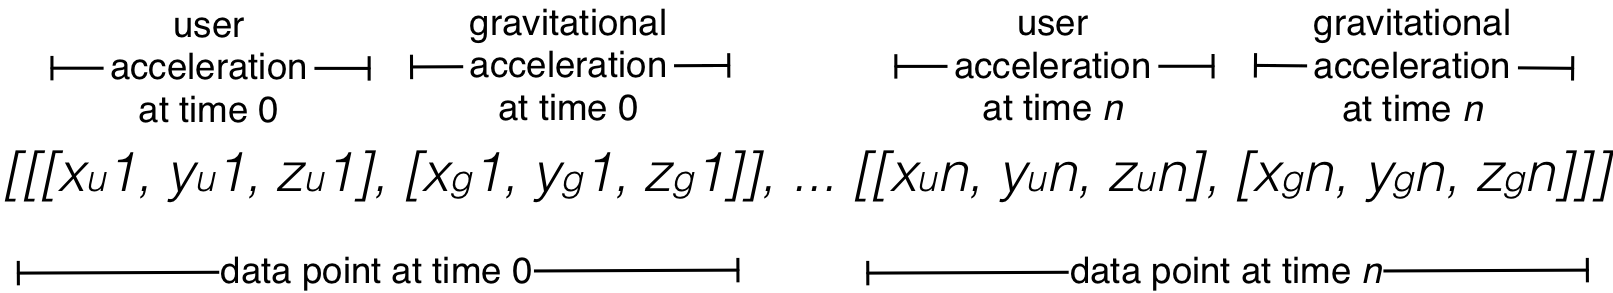 Figure 16.14 - Standard format